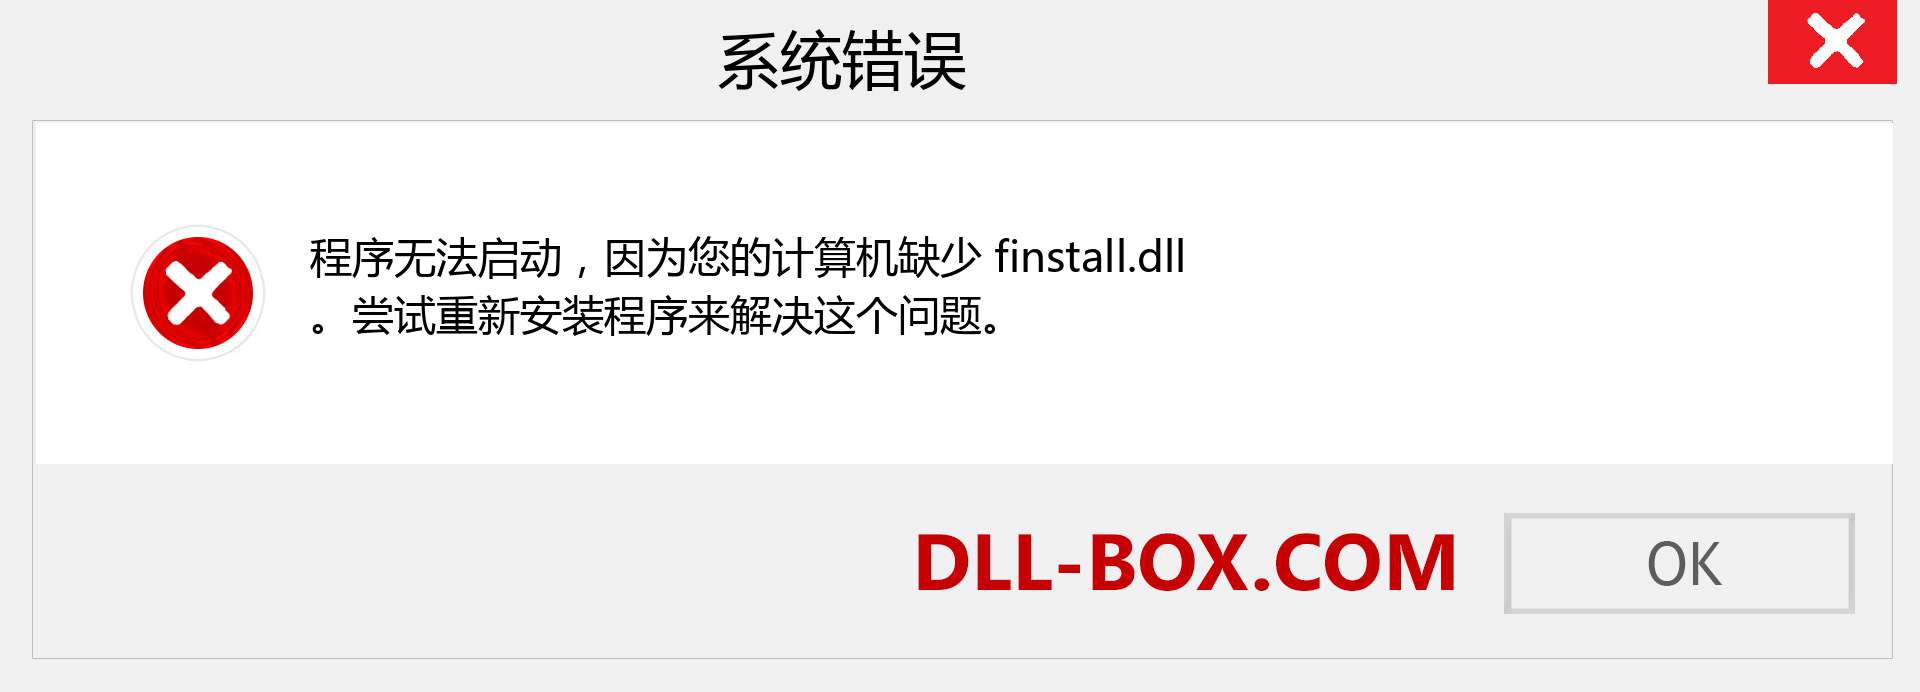 finstall.dll 文件丢失？。 适用于 Windows 7、8、10 的下载 - 修复 Windows、照片、图像上的 finstall dll 丢失错误